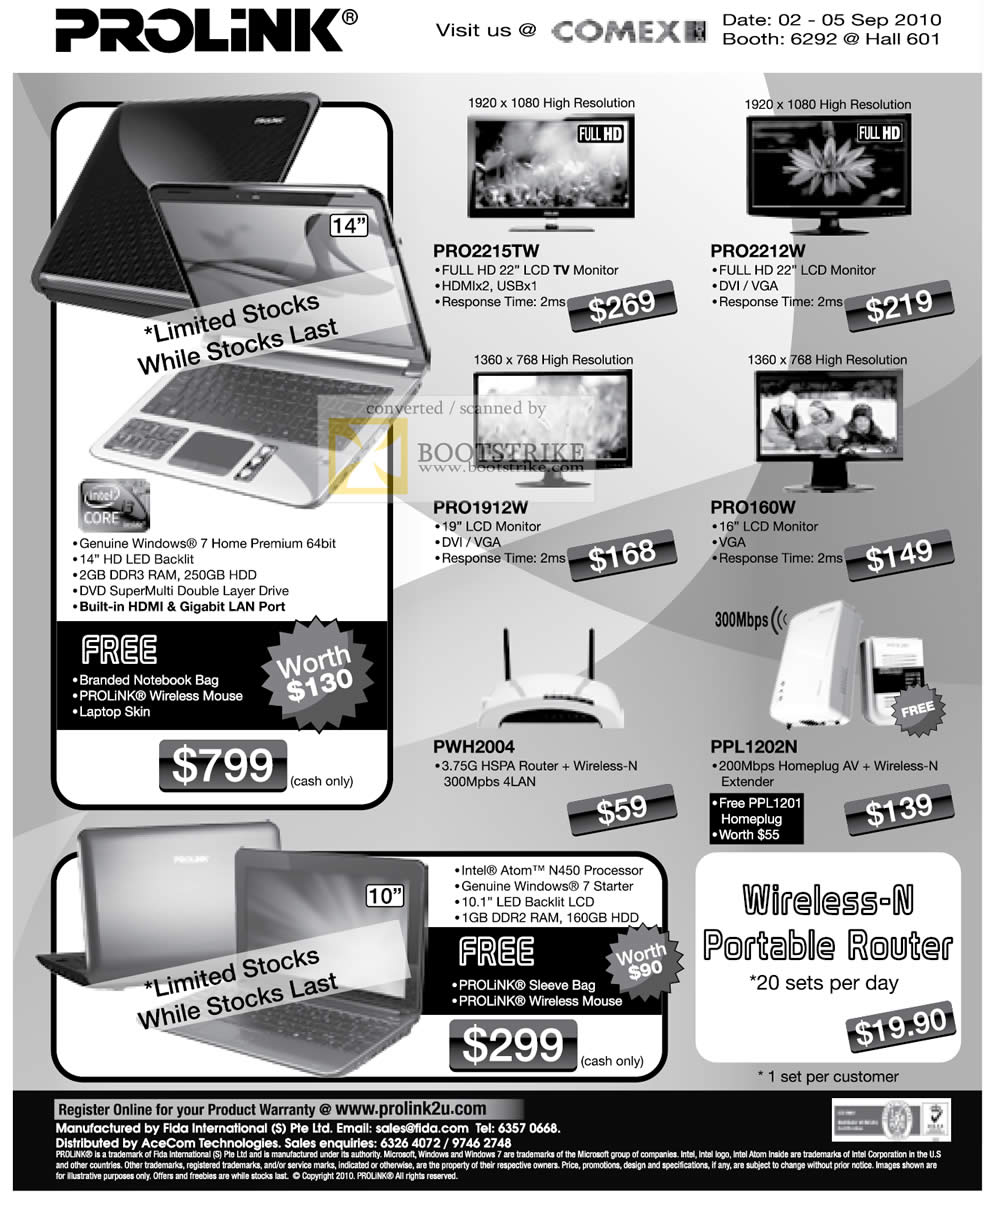 Comex 2010 price list image brochure of Fida Intl Prolink LCD TV Monitor PRO2215TW PRO2212W PRO1912W PRO160W Notebooks Wireless N Portable Router HSPA Homeplug